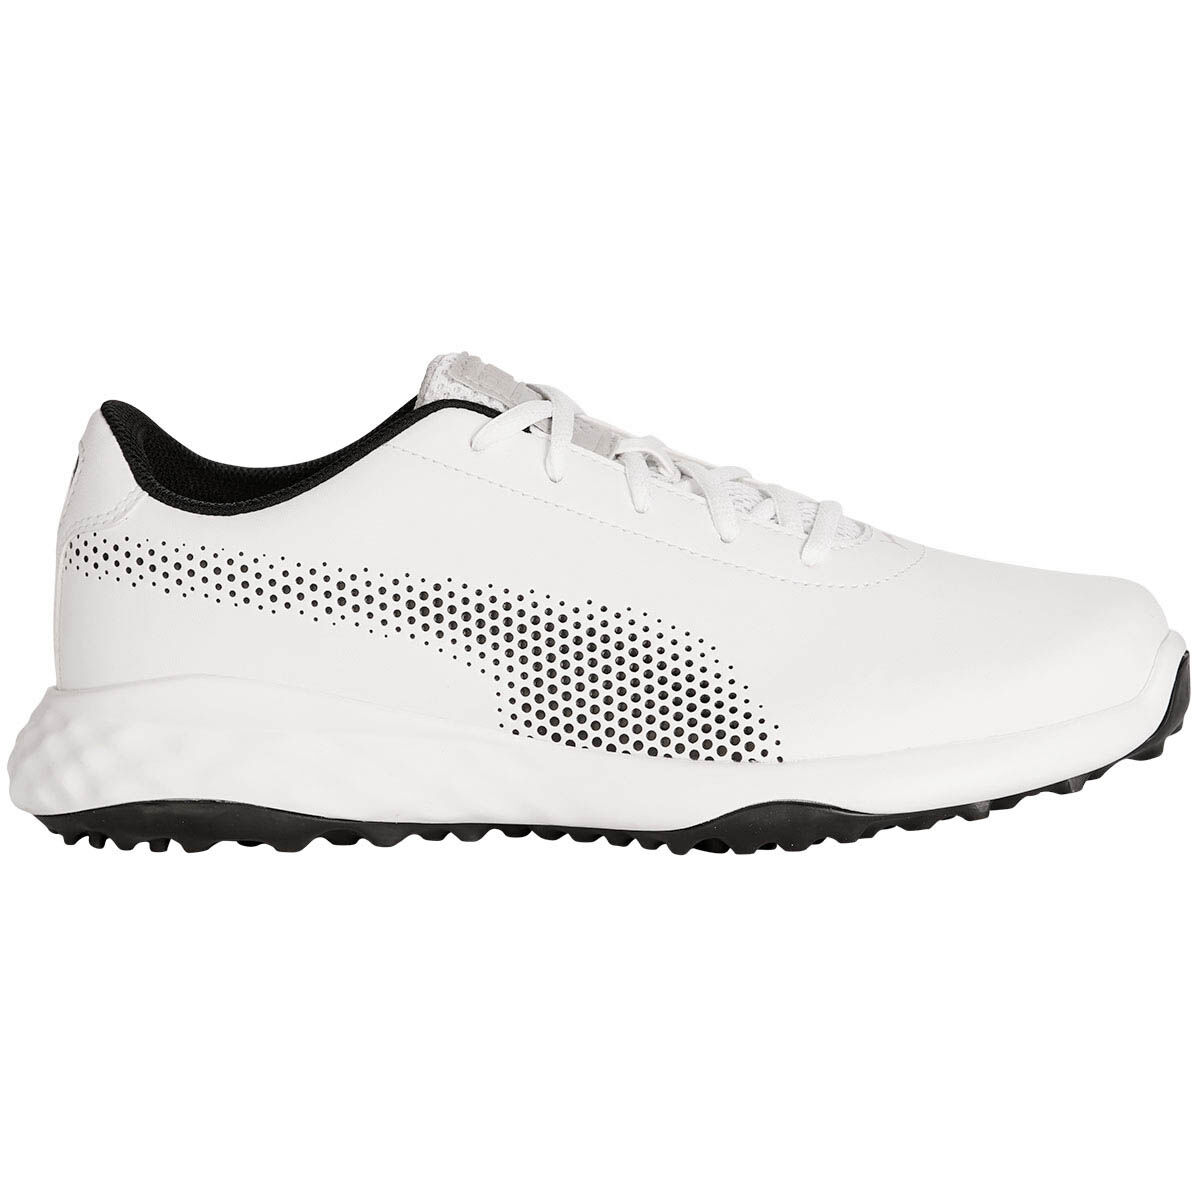 puma fusion tech golf shoes